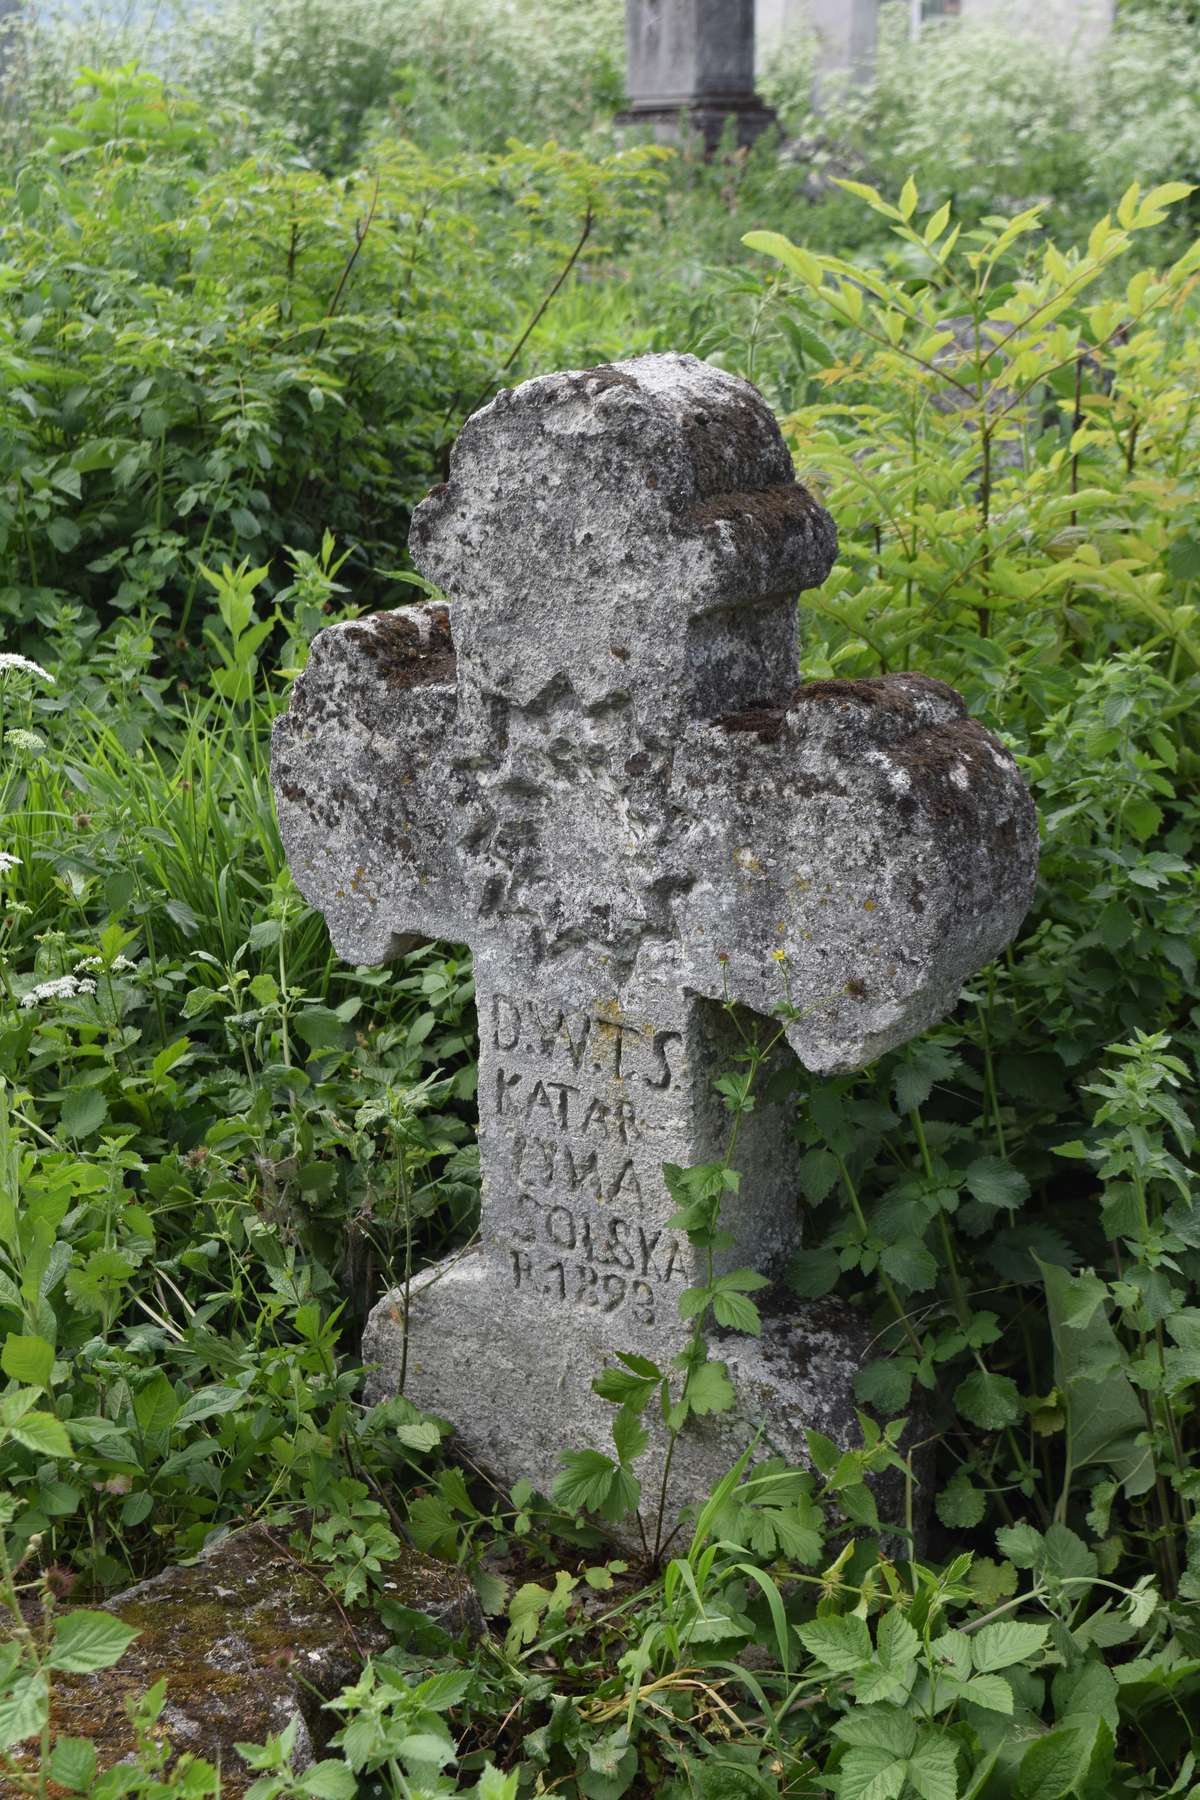 Tombstone of Katarzyna Solska, Zbarazh cemetery, state 2018